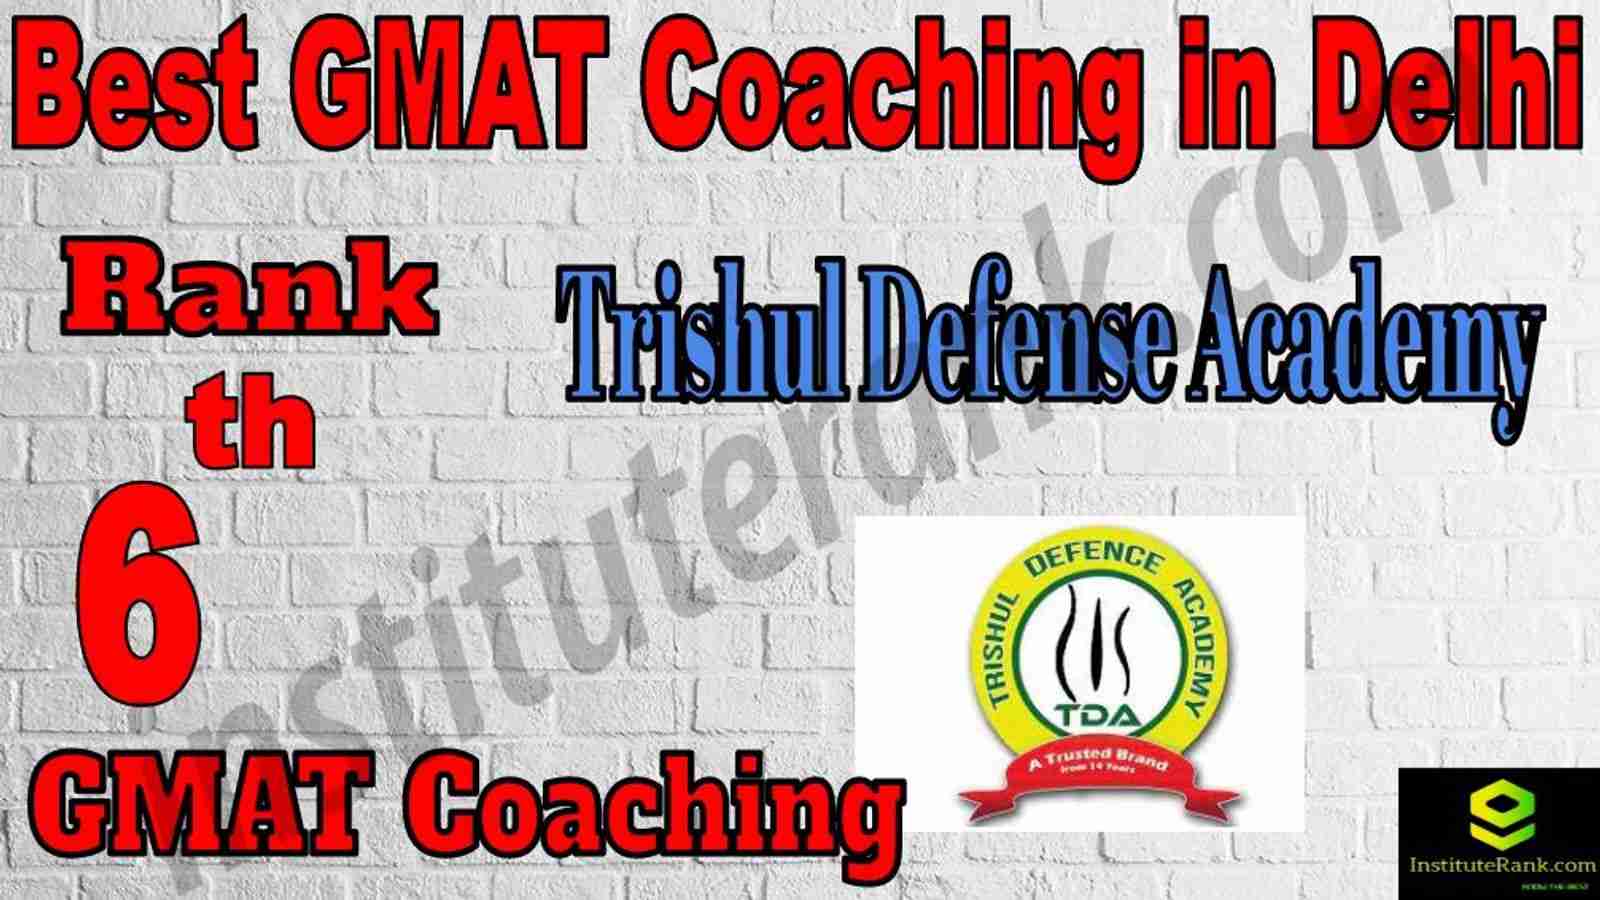 6th Best GMAT Coaching in Delhi